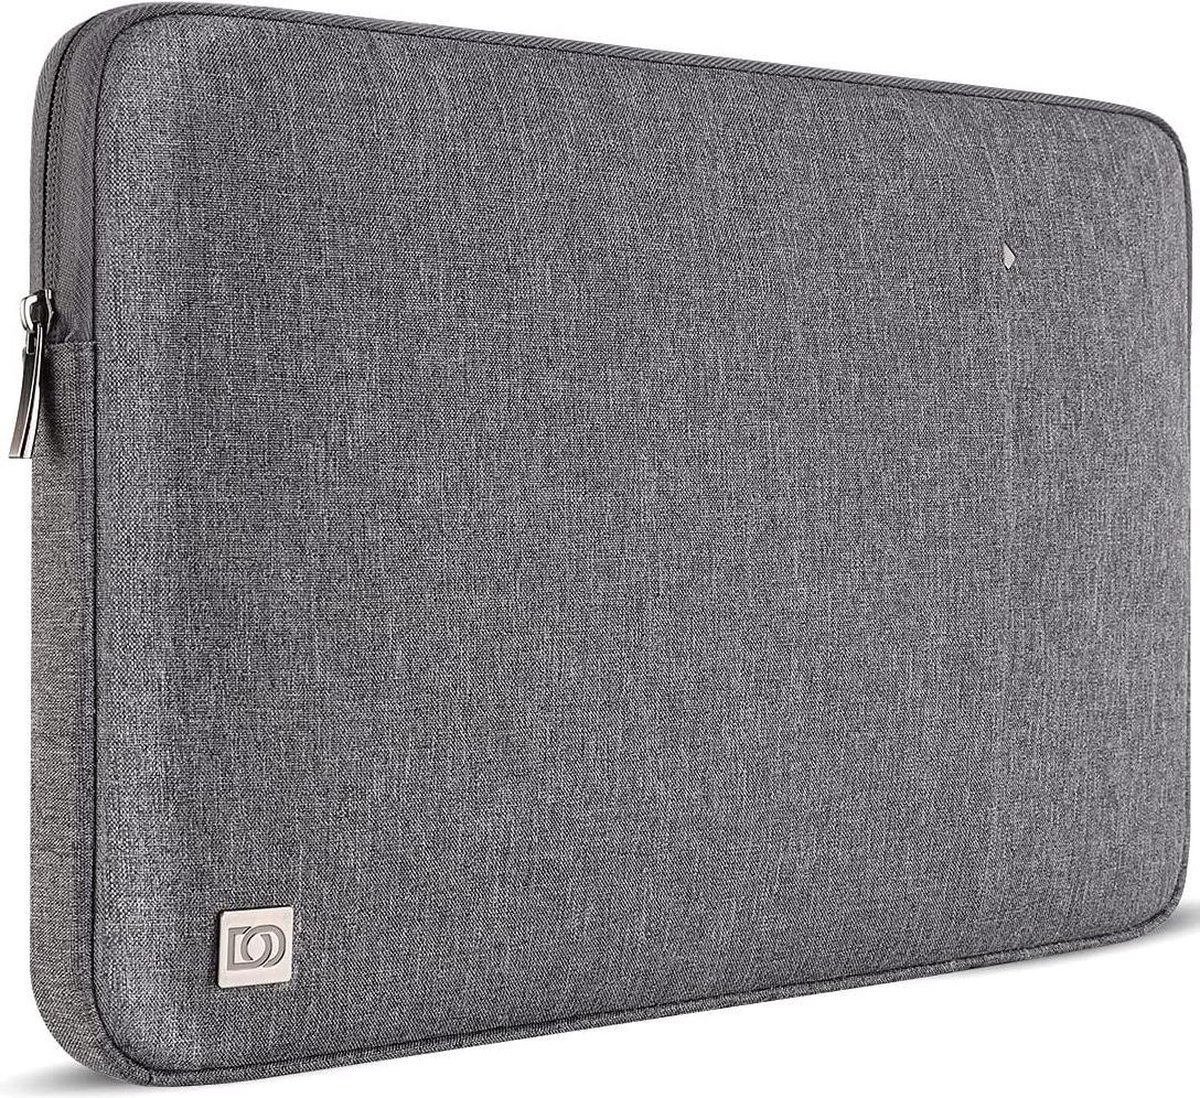 Bellamar 17 inch waterdichte laptop sleeve case notebook beschermhoes tas laptoptas beschermhoes voor 17,3